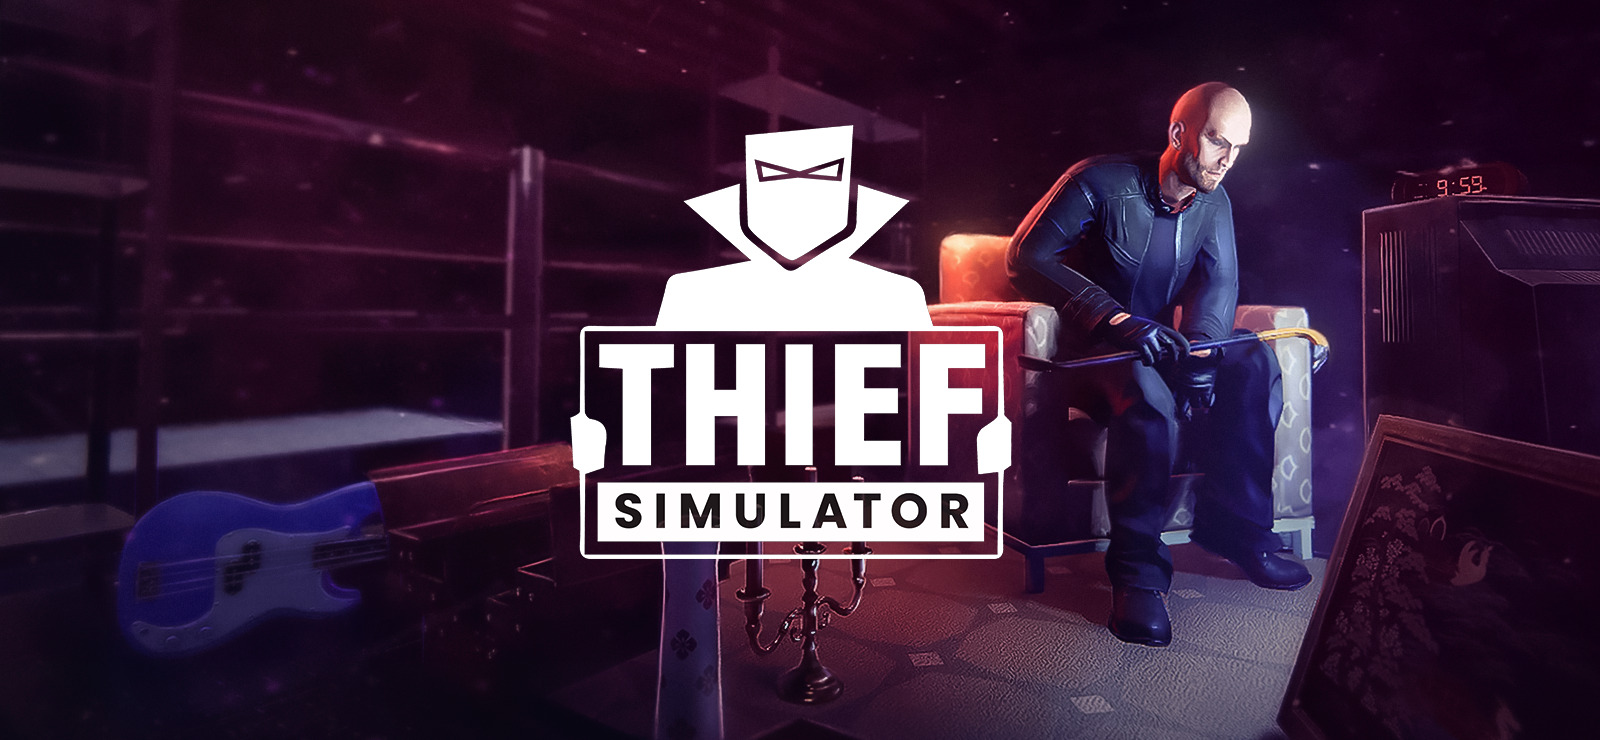 thief life simulator download free